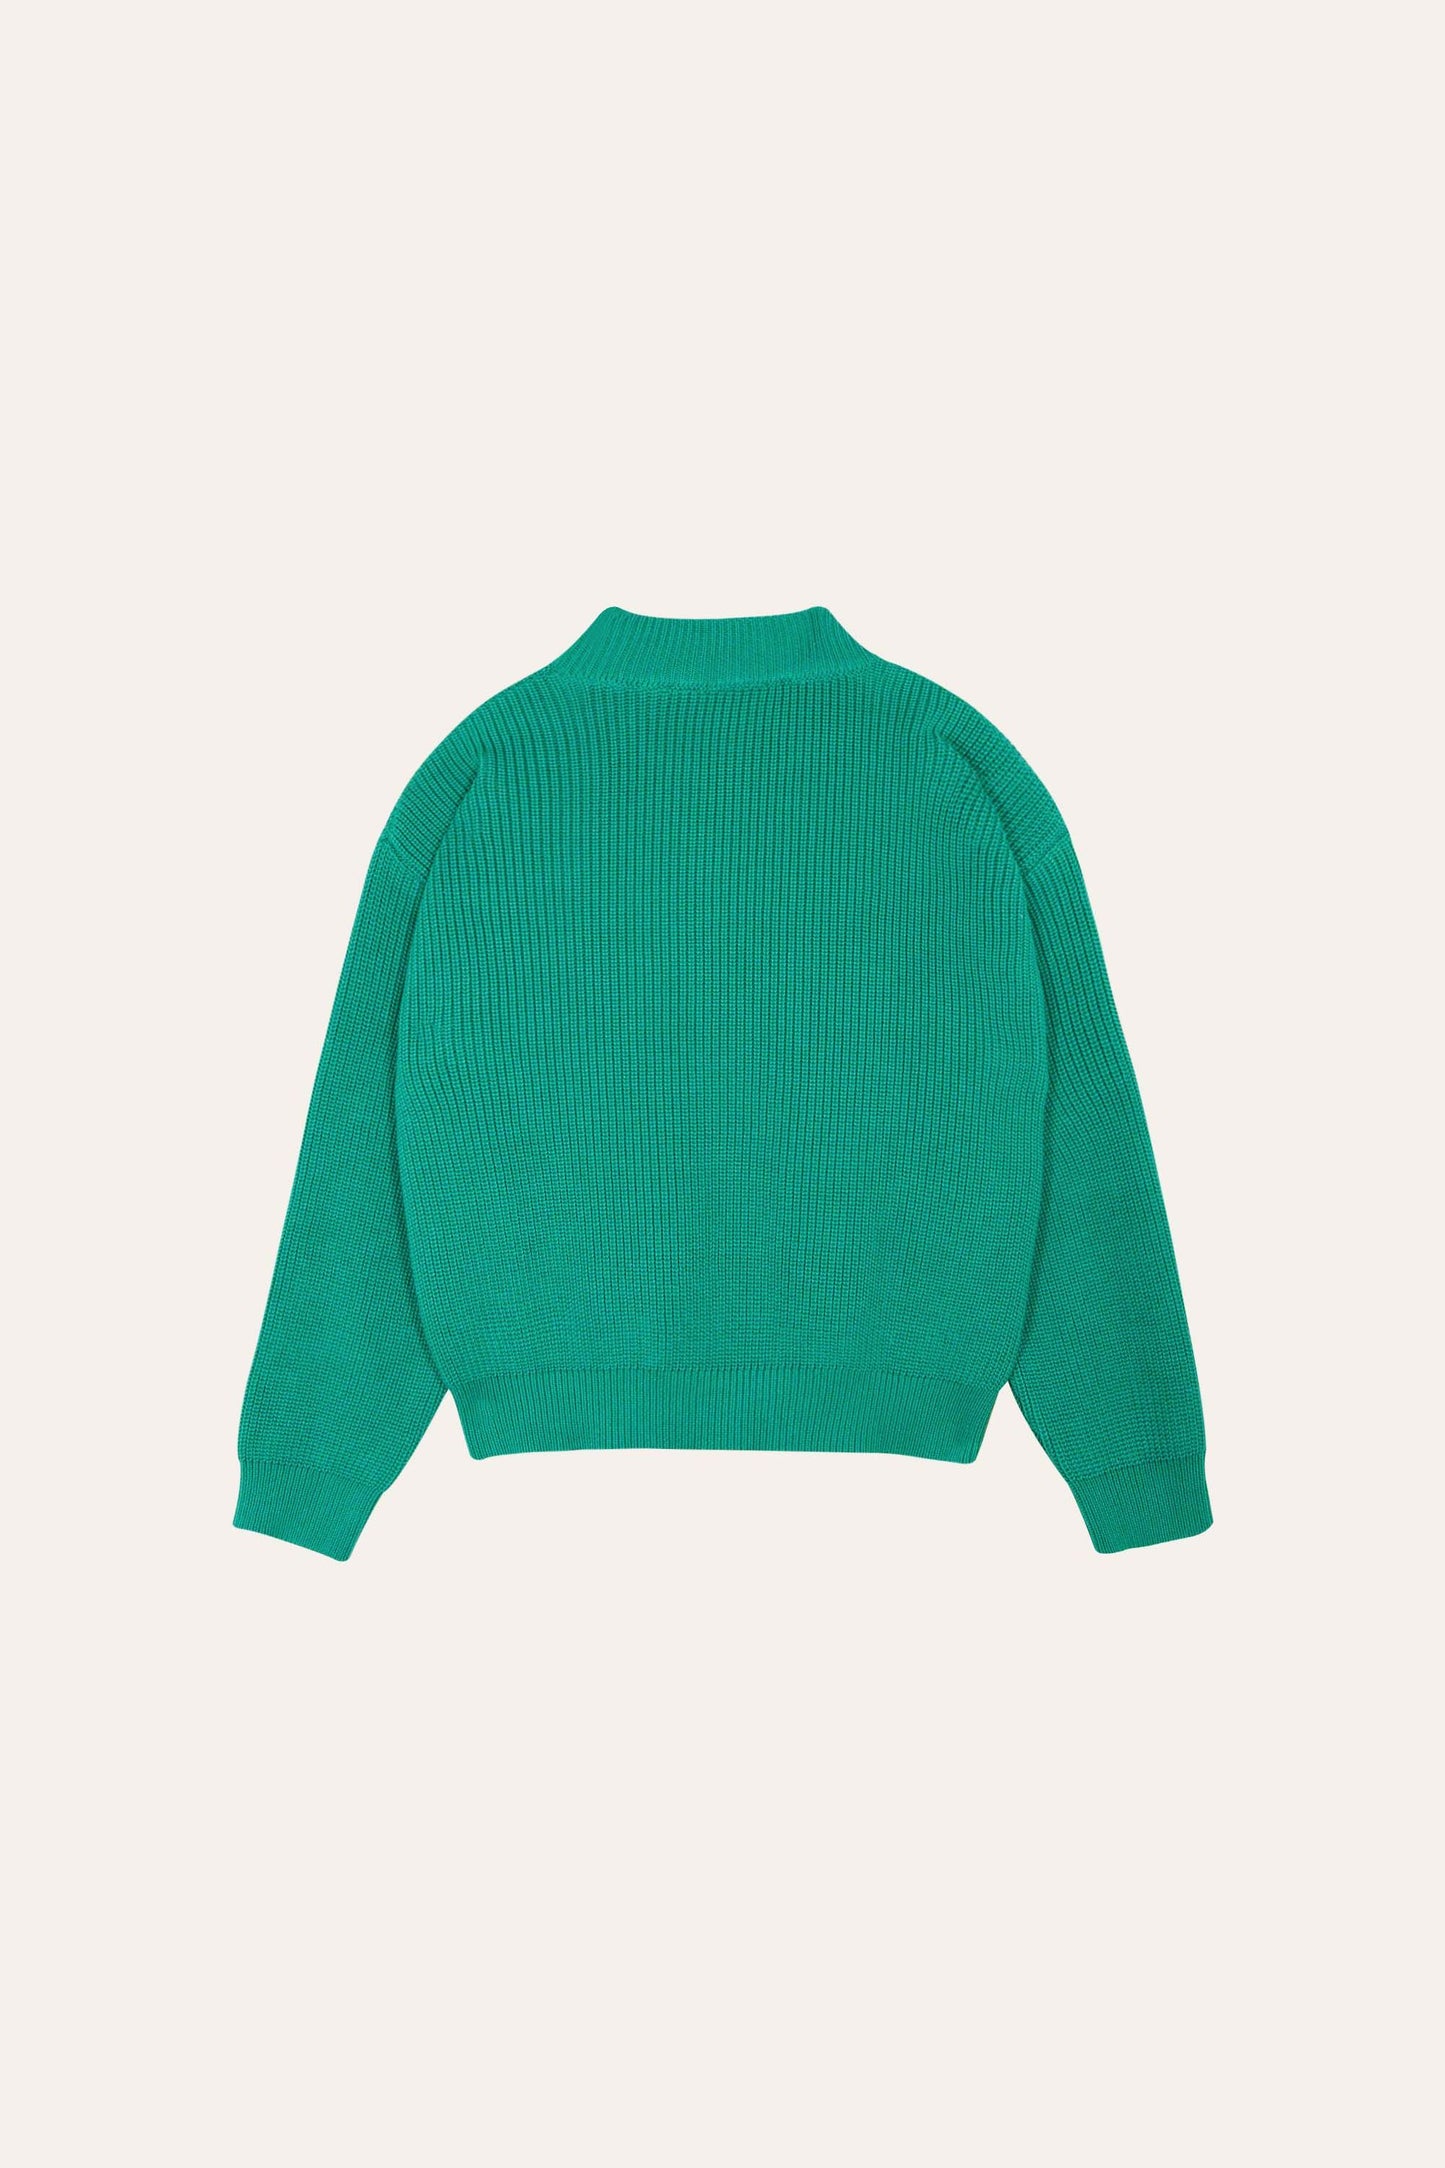 Green Sweater- The Campamento